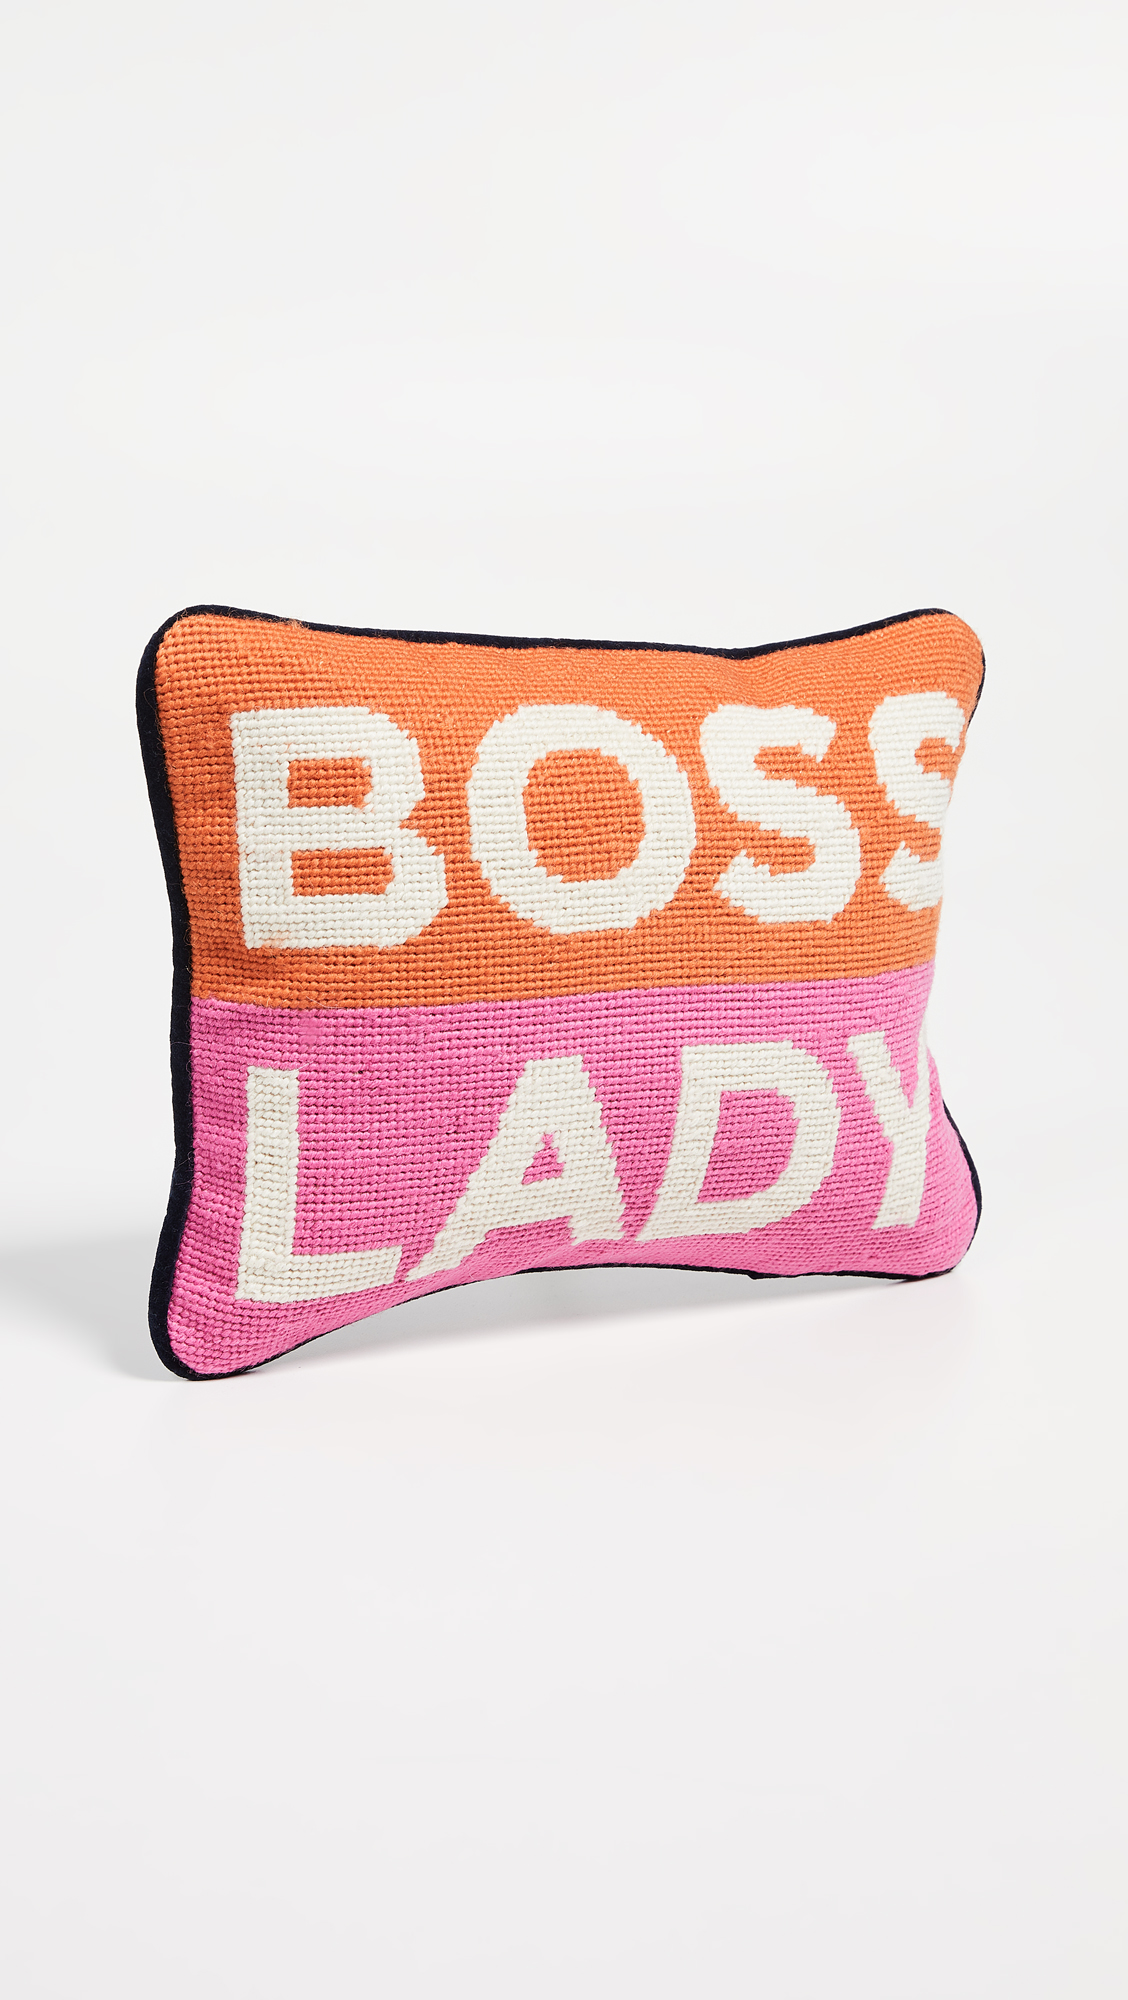 Needlepoint Boss Lady Pillow Orange and Pink